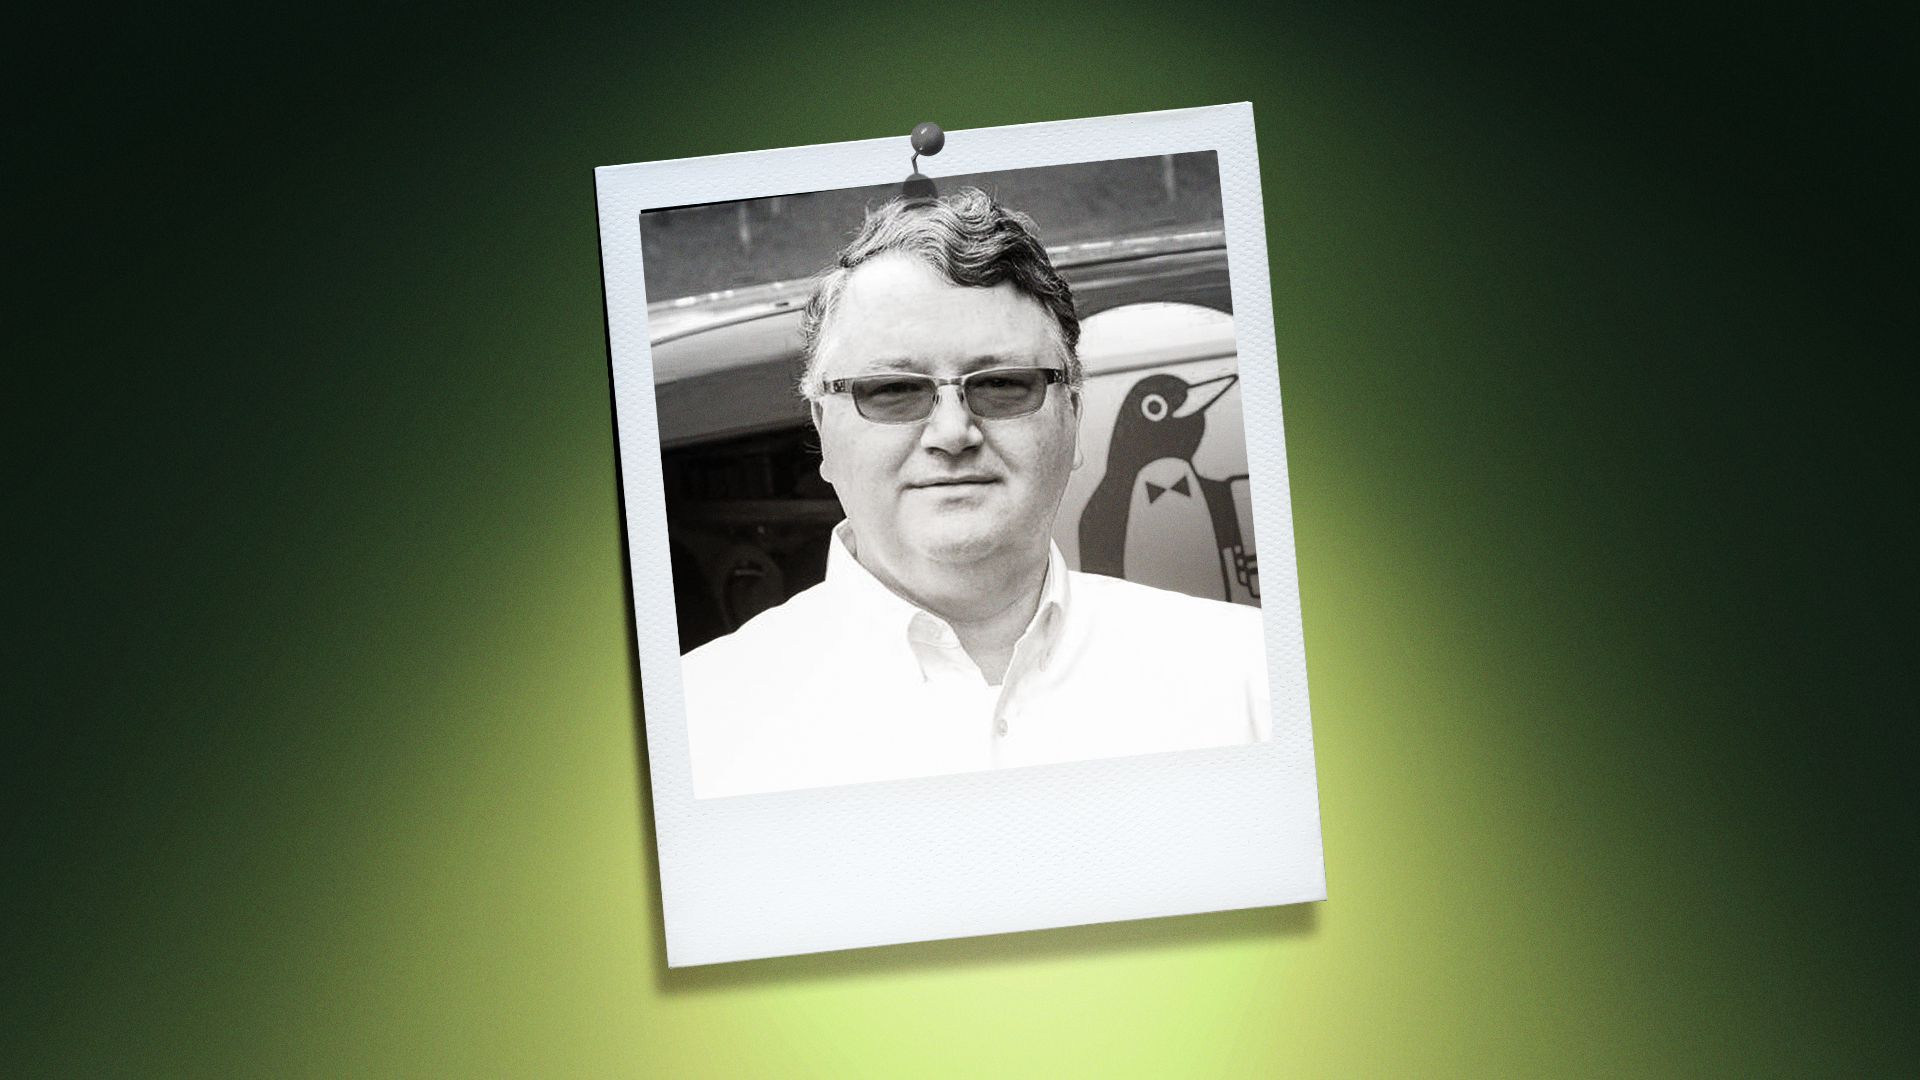 Photo illustration of Scot Wingo in the center of a Polaroid photo under a green spotlight.